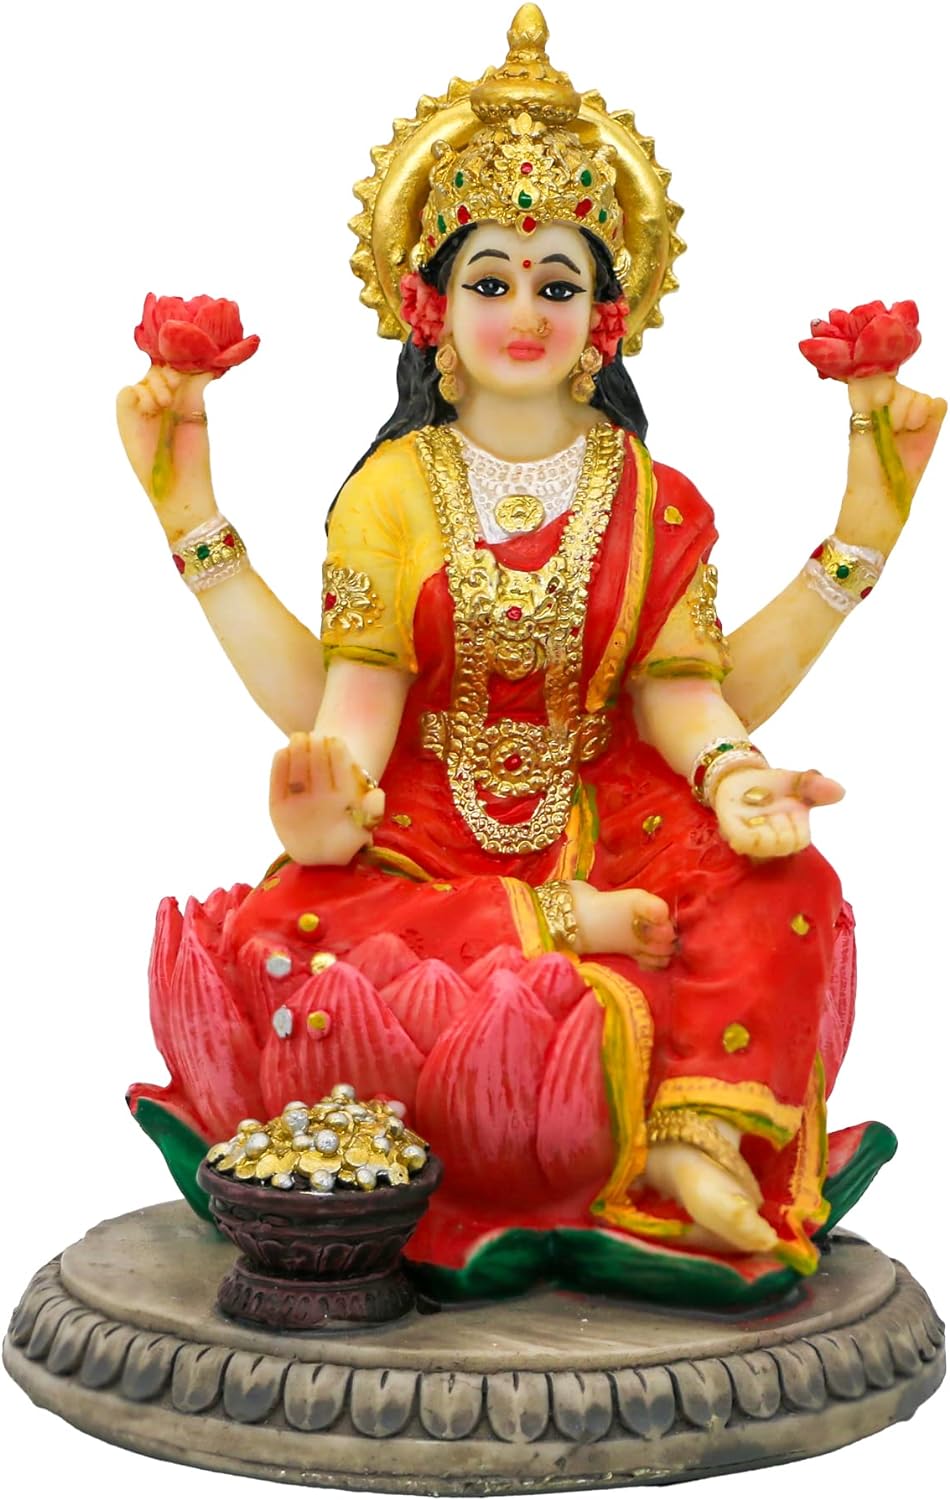 Indian Goddess Lakshmi Statue Figurine - 5.3”H Lakshmi Idols Statue Murti Laxmi Staue Home Office Temple Mandir Pooja Item Diwali Gifts Diwali Decoration for Home Spiritual Gift